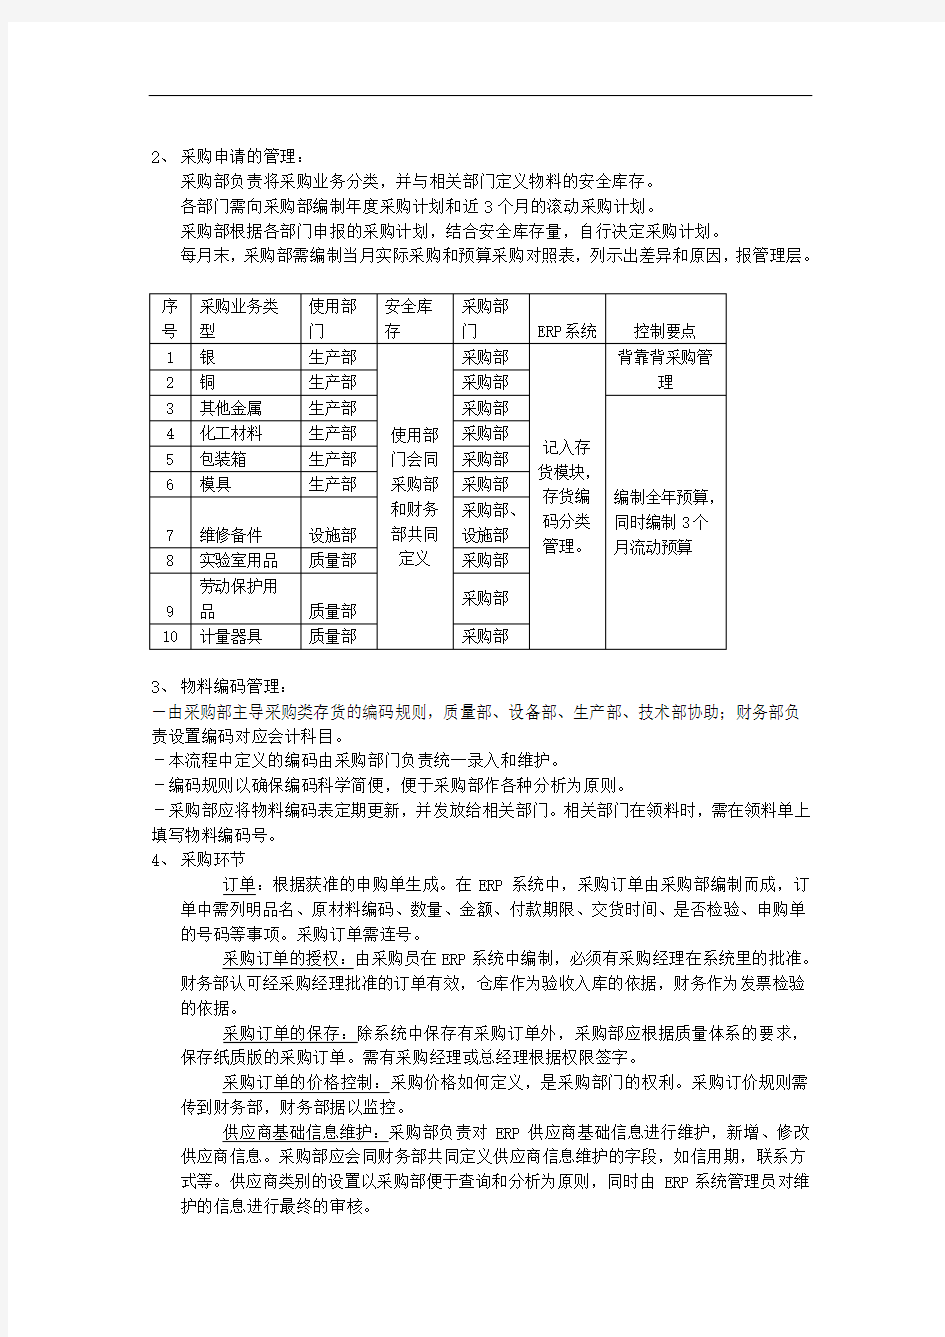 ERP采购付款流程第4版(中文)